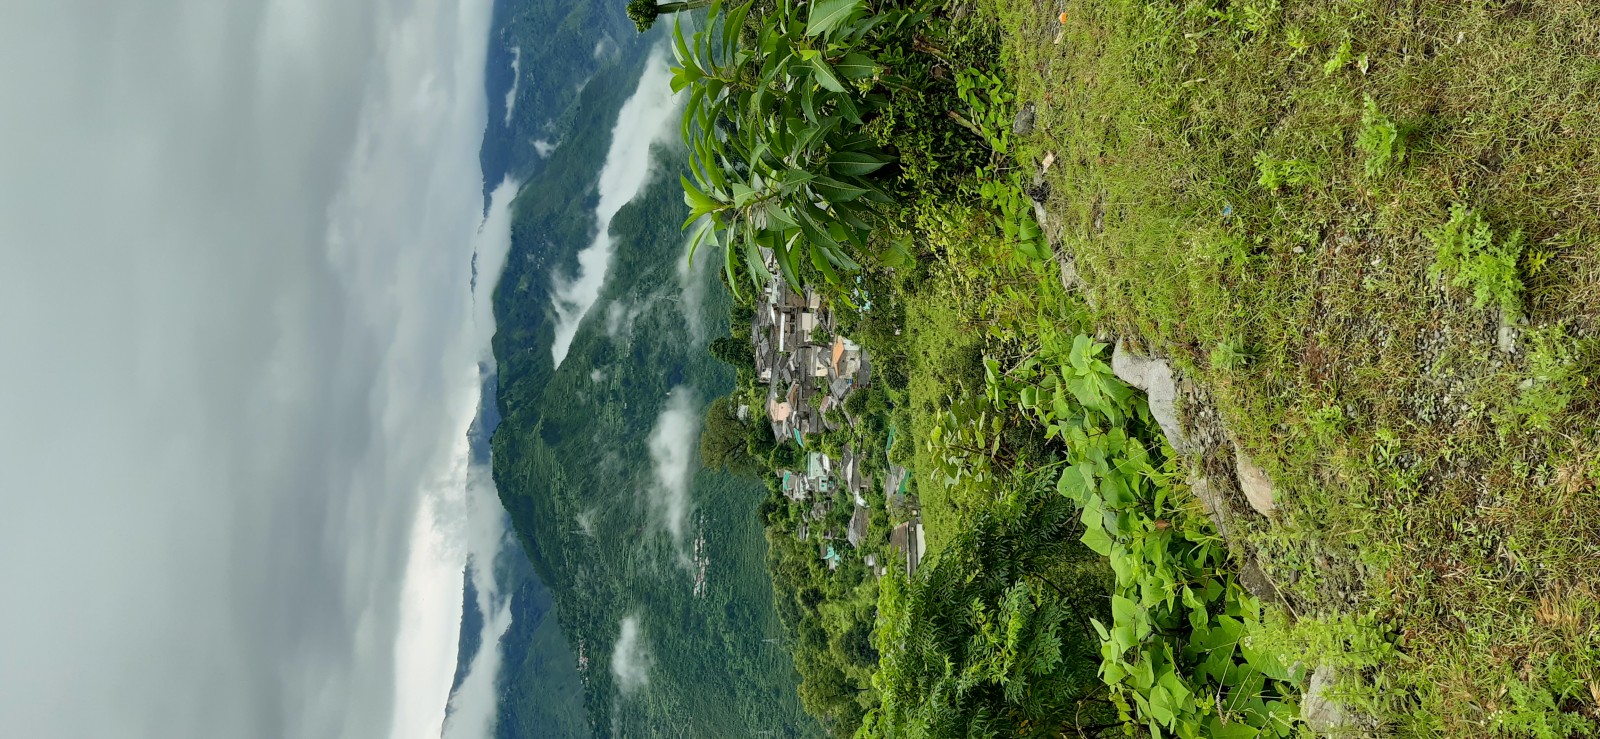 Thair village, Pauri Garhwal